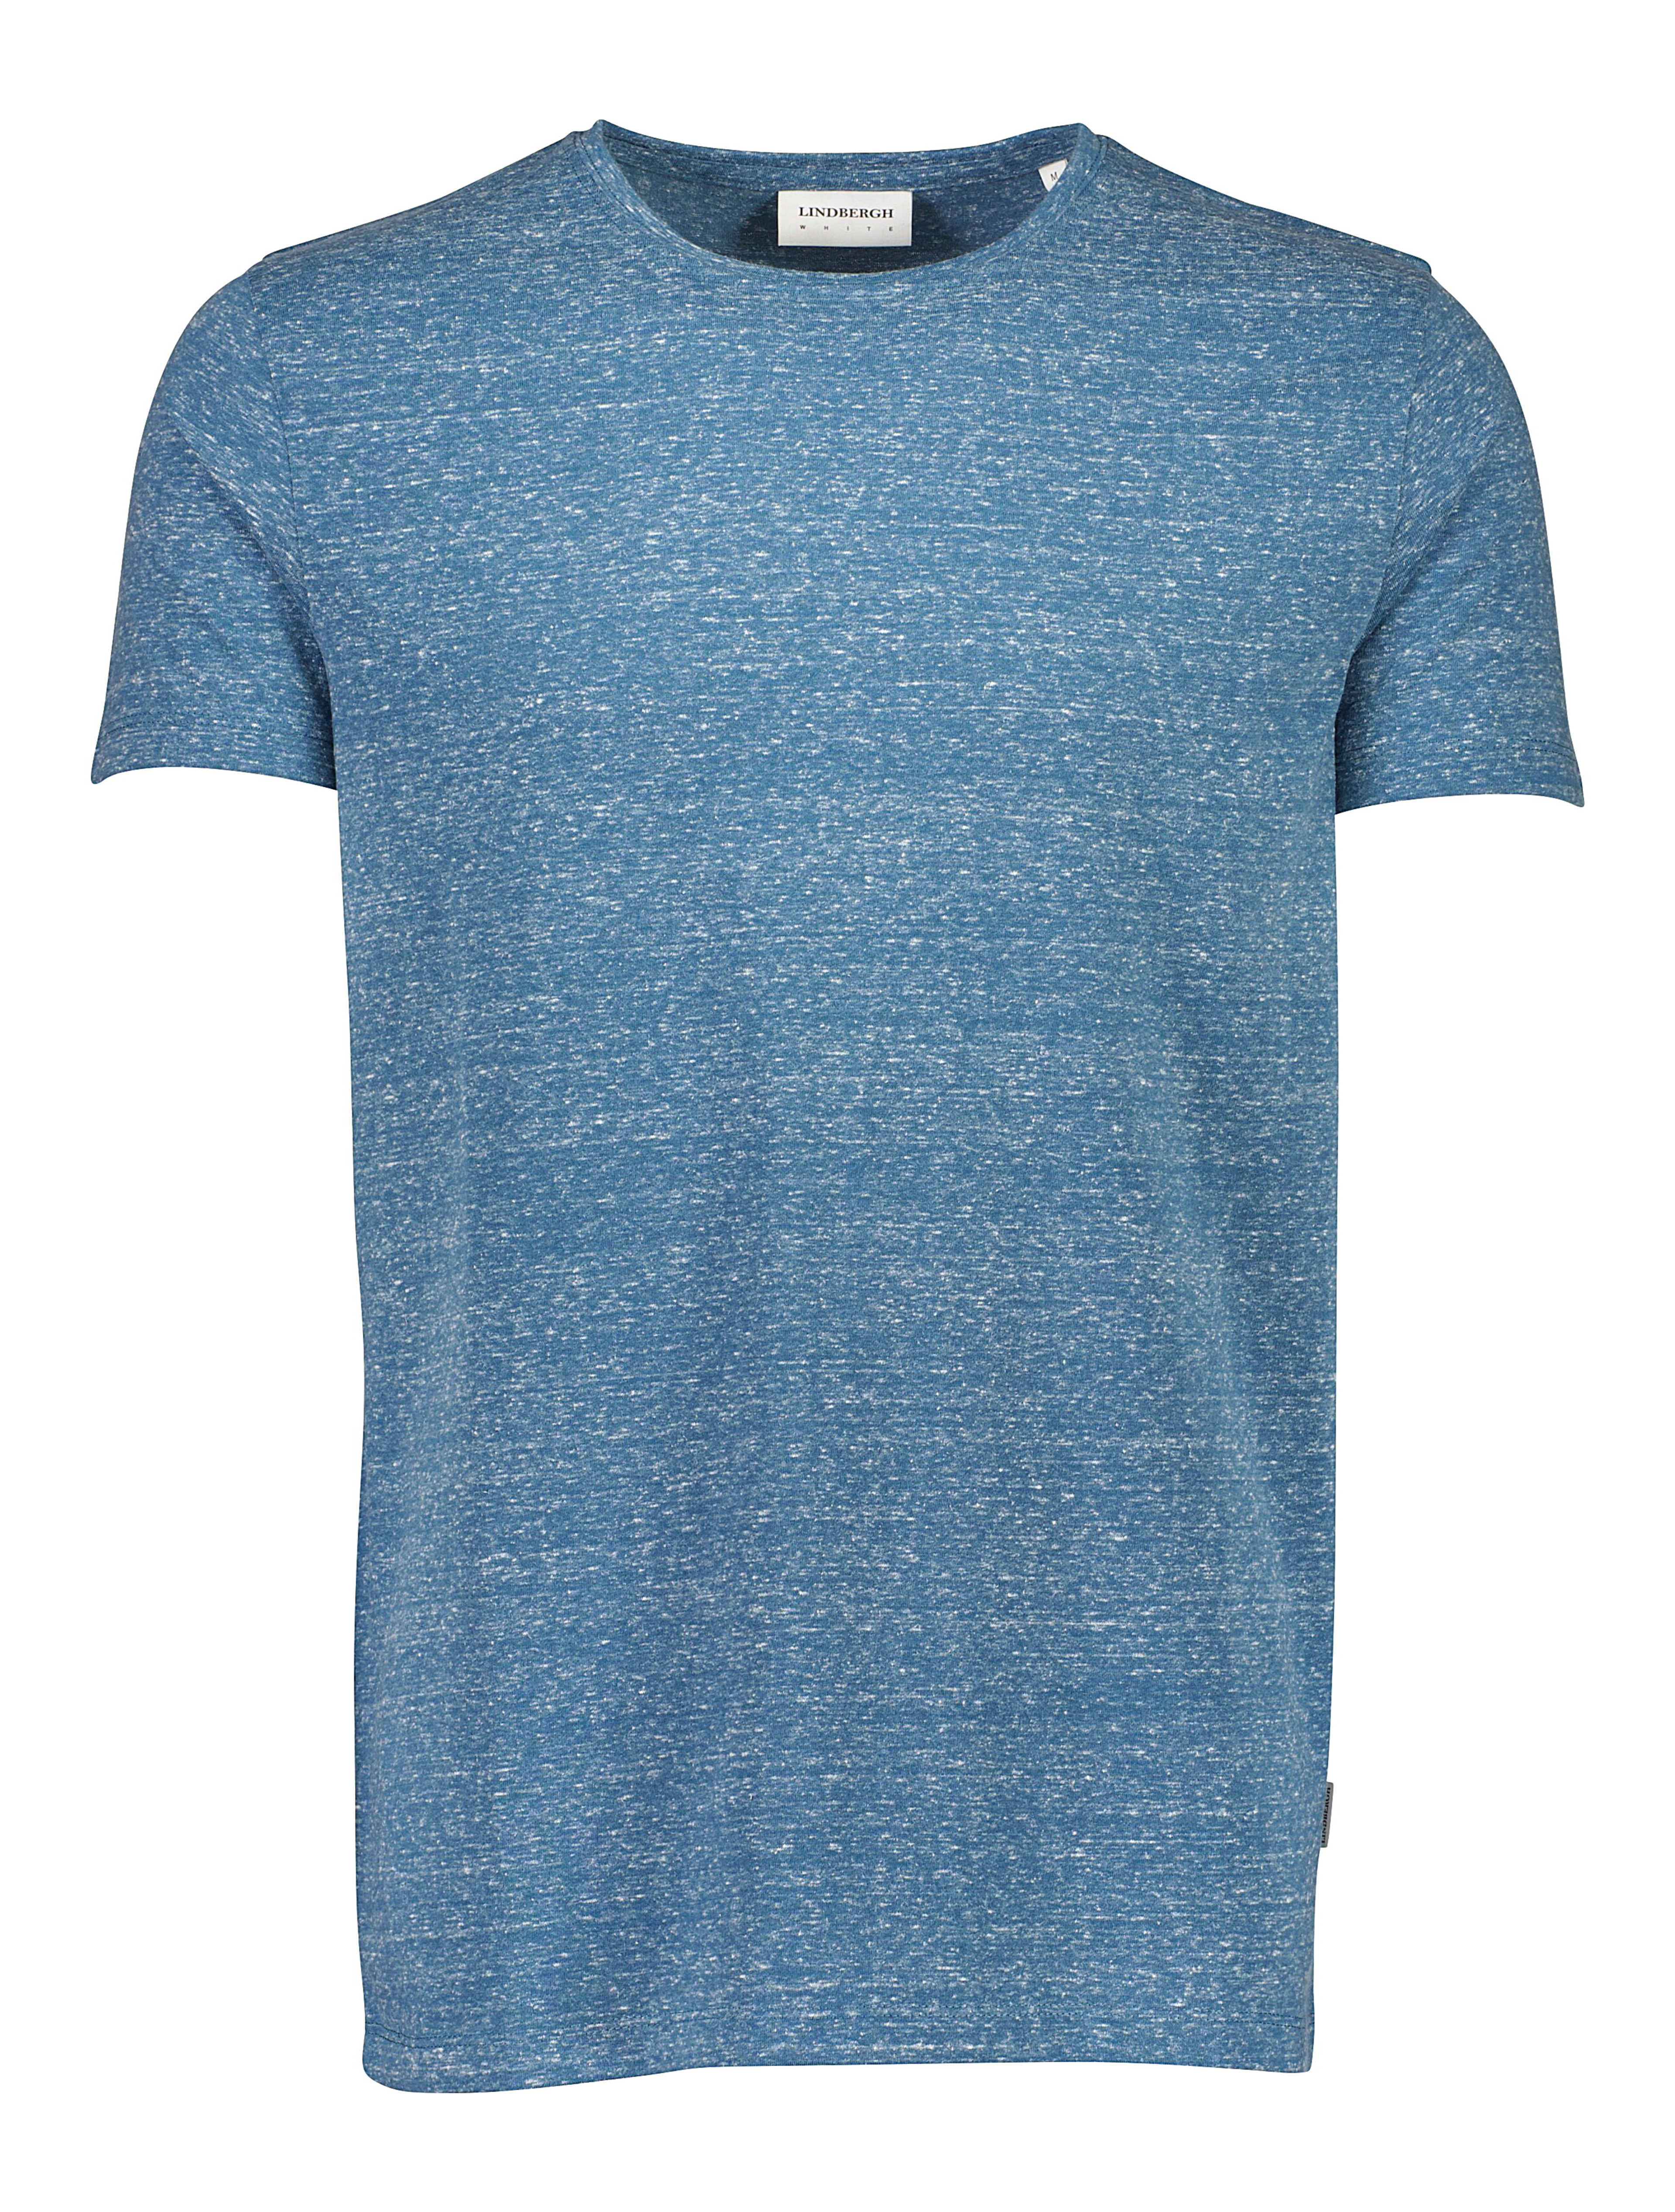 Lindbergh T-shirt blå / petrol